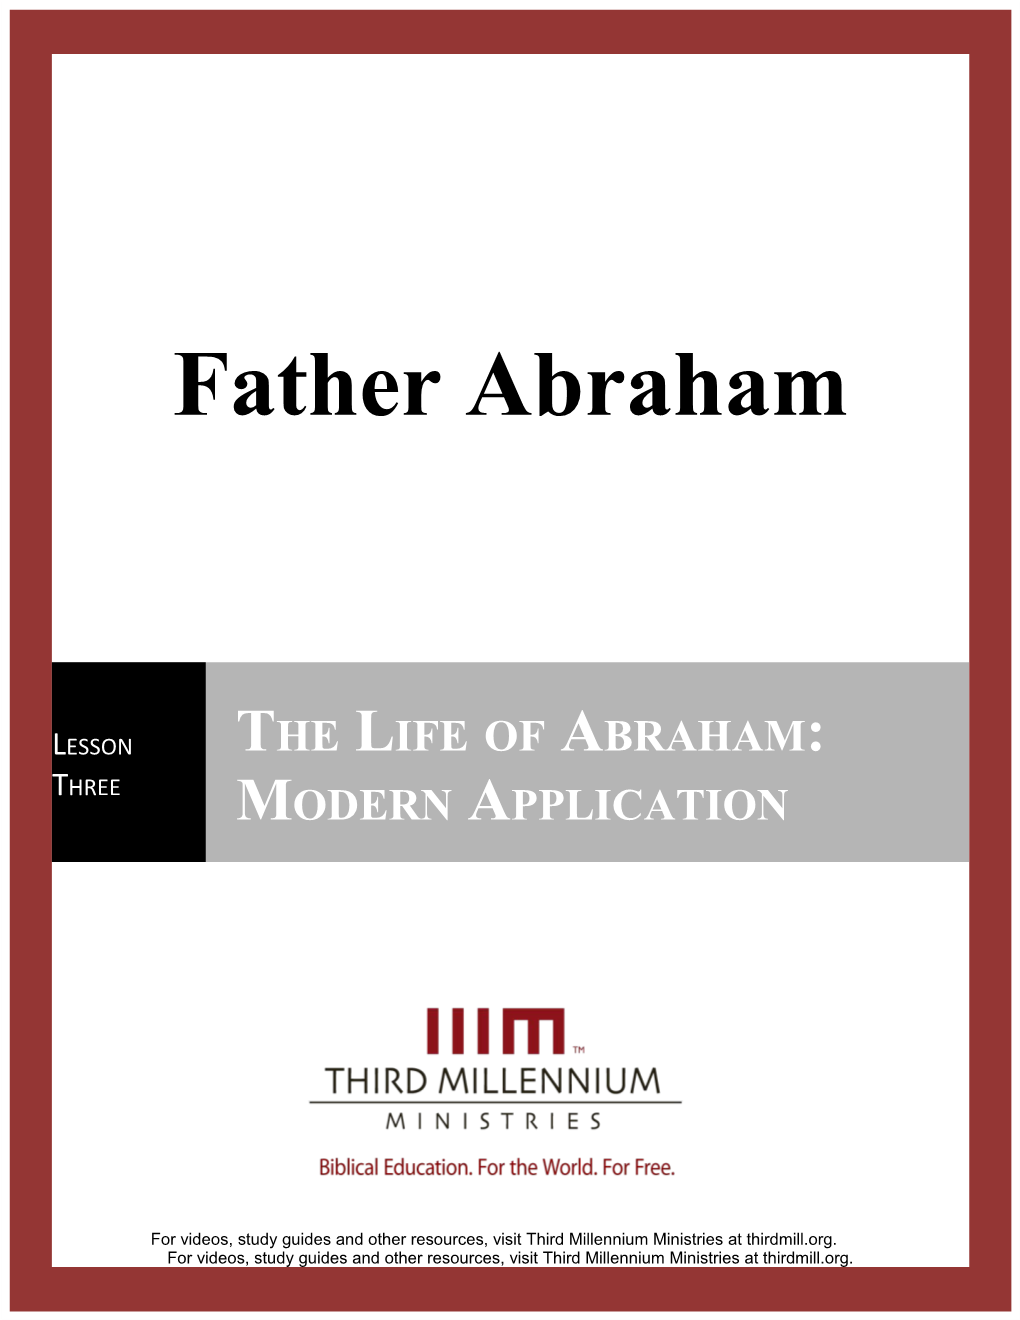 Father Abraham, Lesson 3